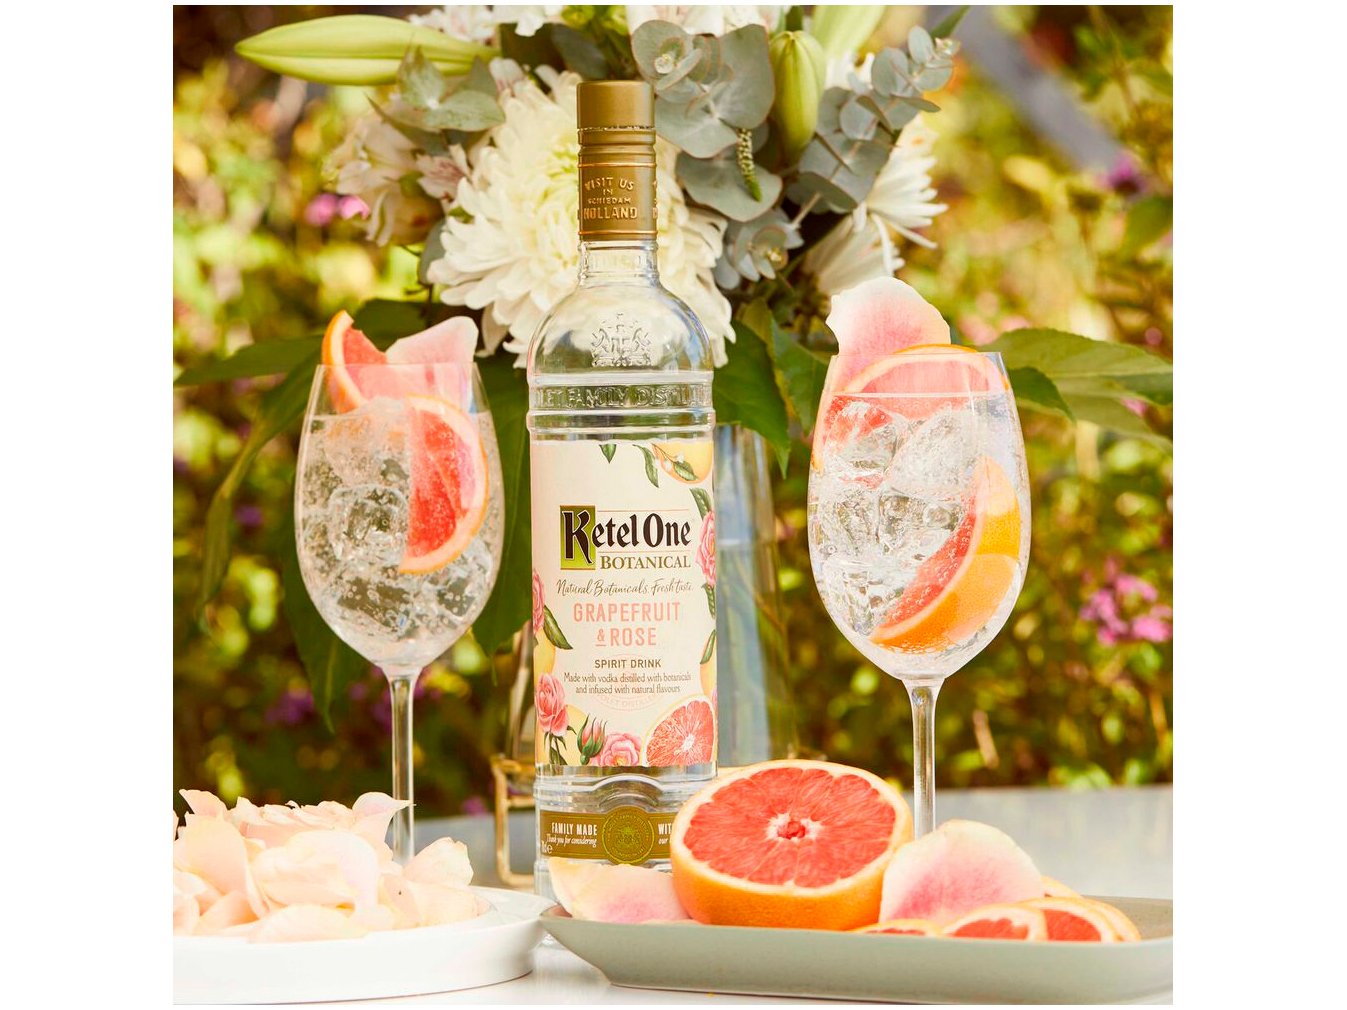 Vodka Ketel One Botanical Grapefruit  Rose 750ml - 2